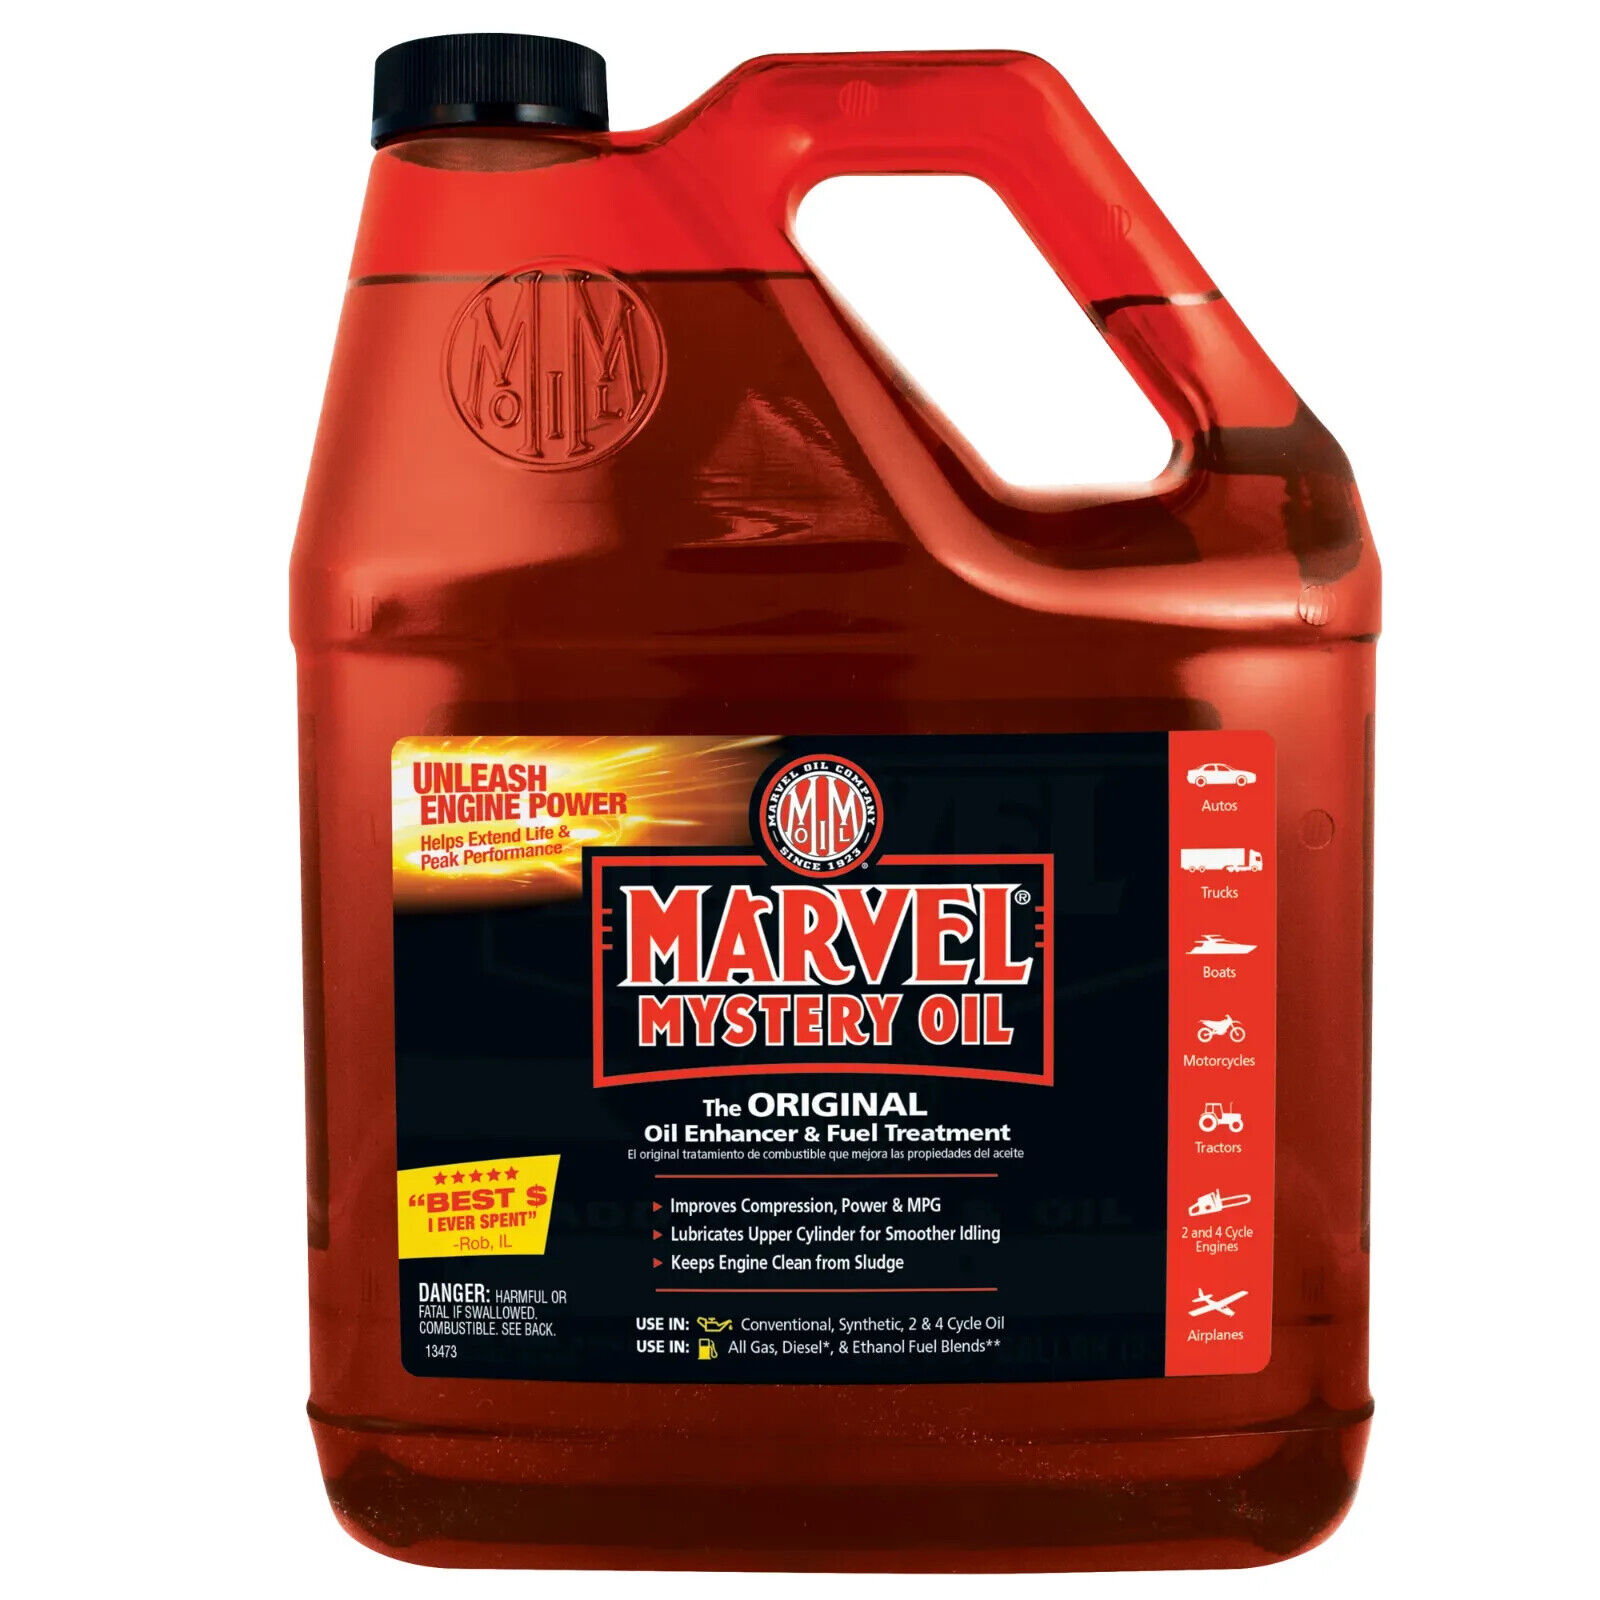 Marvel Mystery Oil, Oil Enhancer and Fuel Treatment, 1 Gallon, Prevents Rust